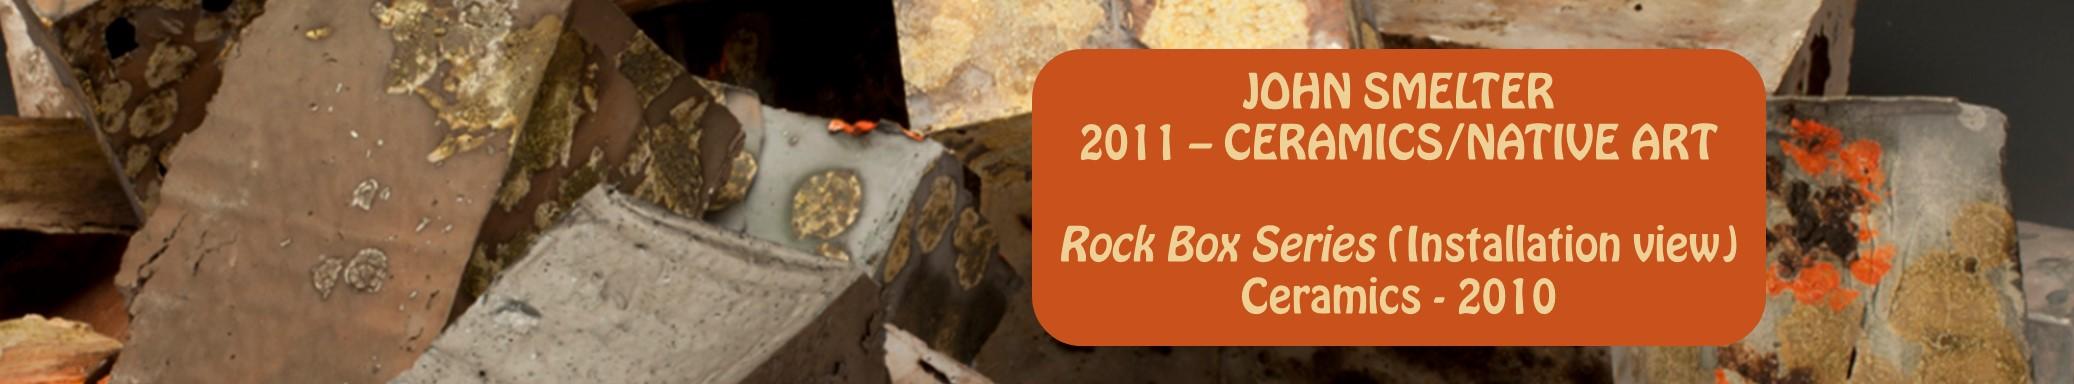 John Smelter - ceramics, Native art - Rock Box Series installation view - ceramics - 2010